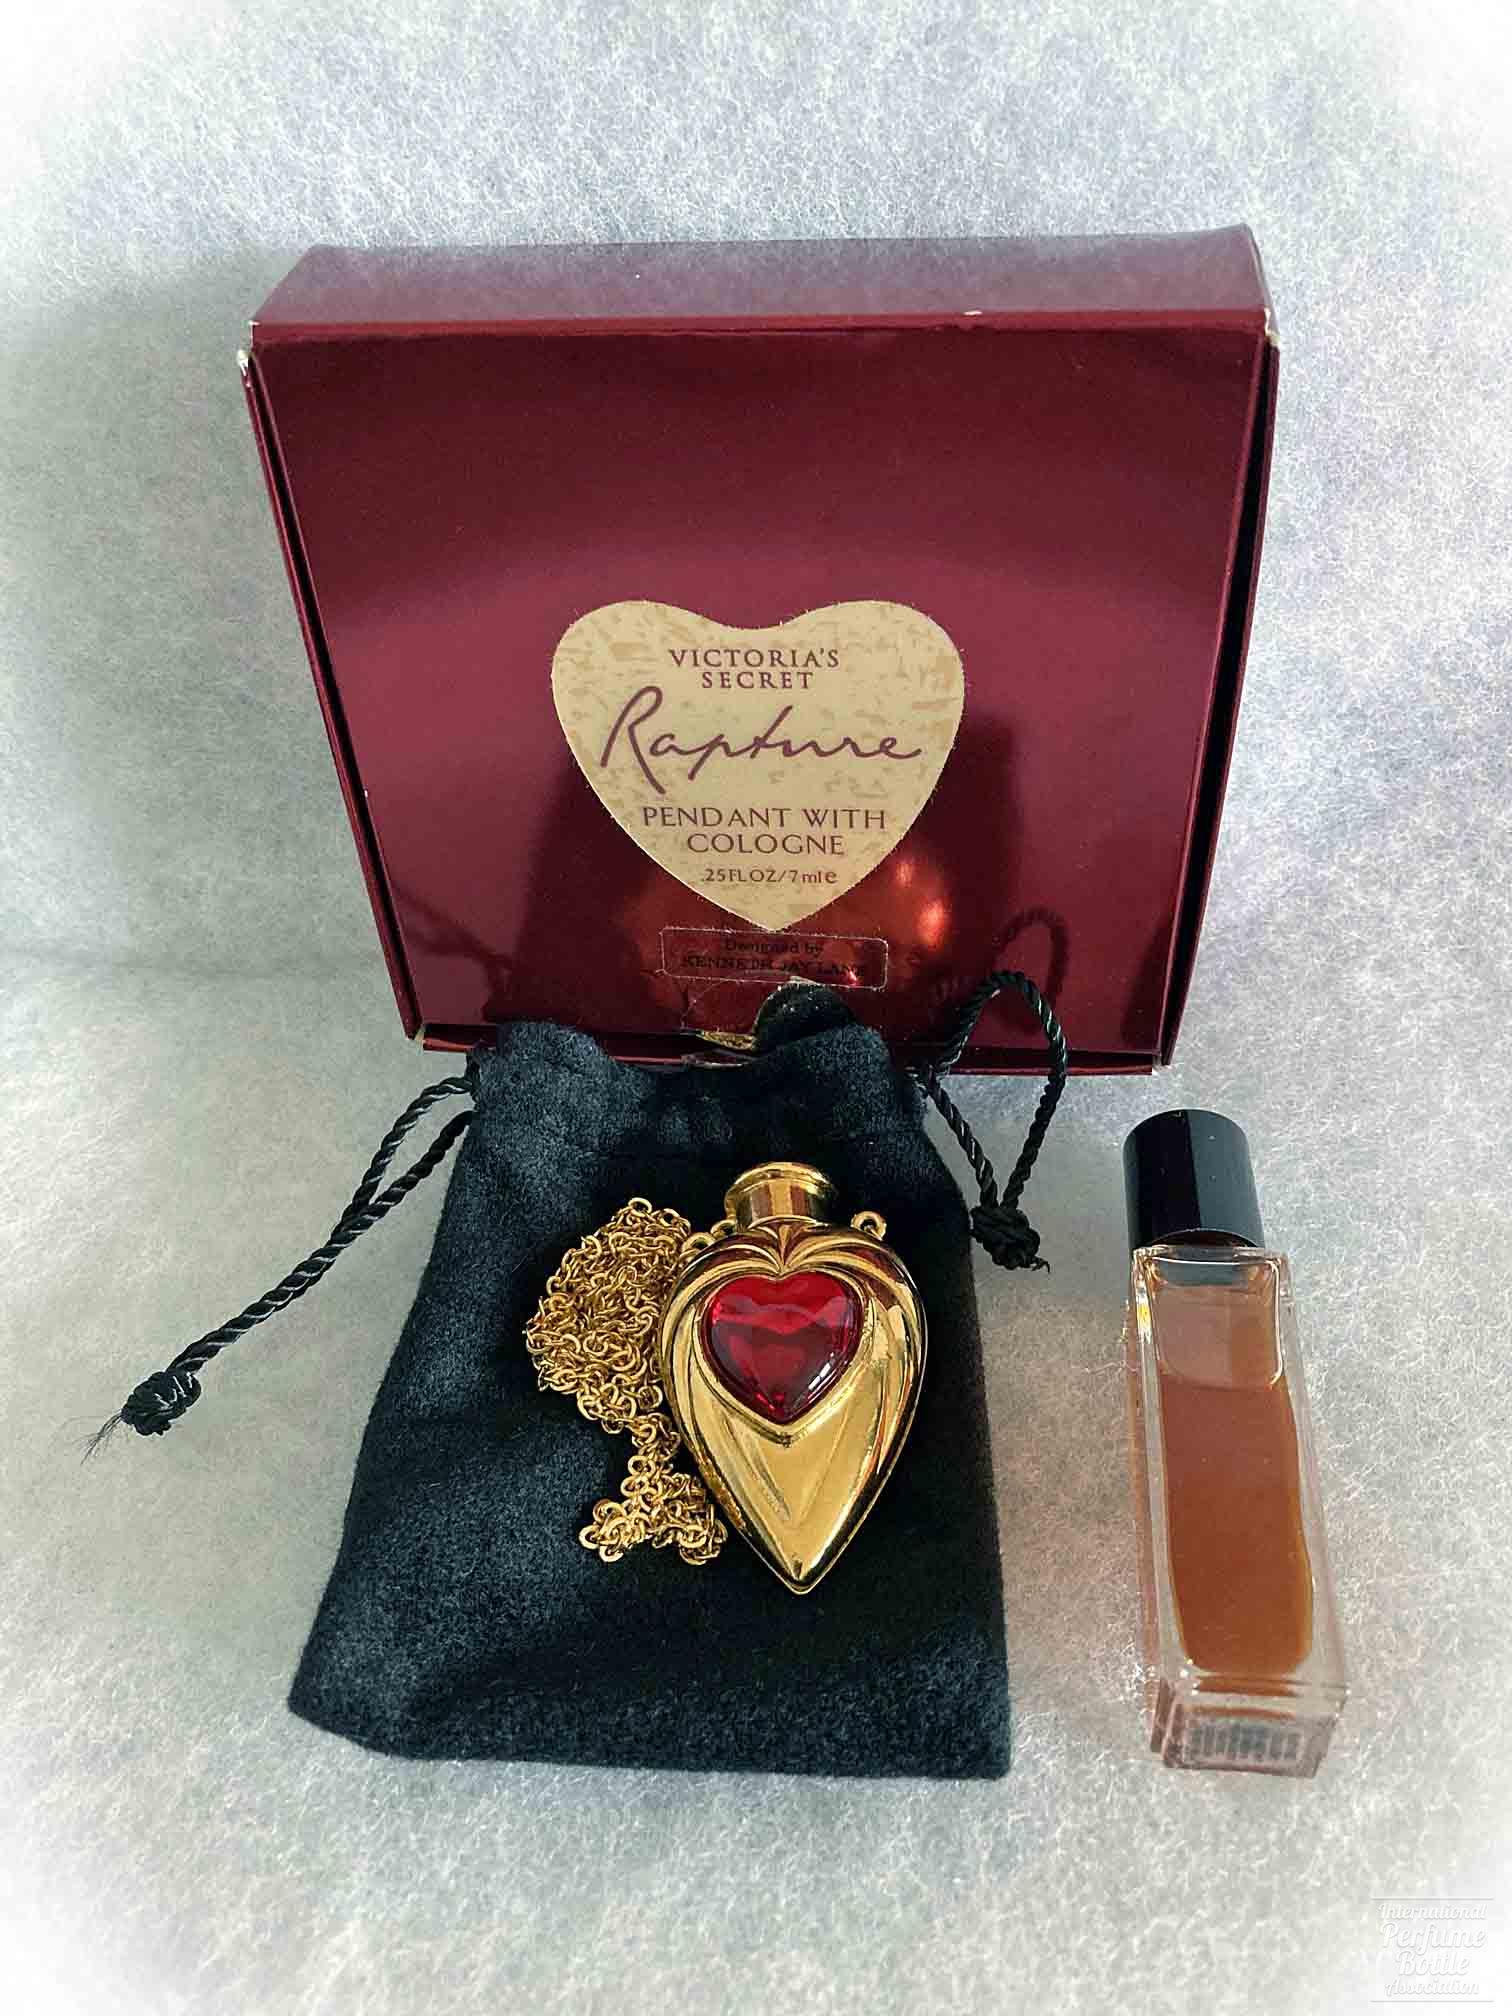 "Rapture" Perfume Pendant by Victoria's Secret